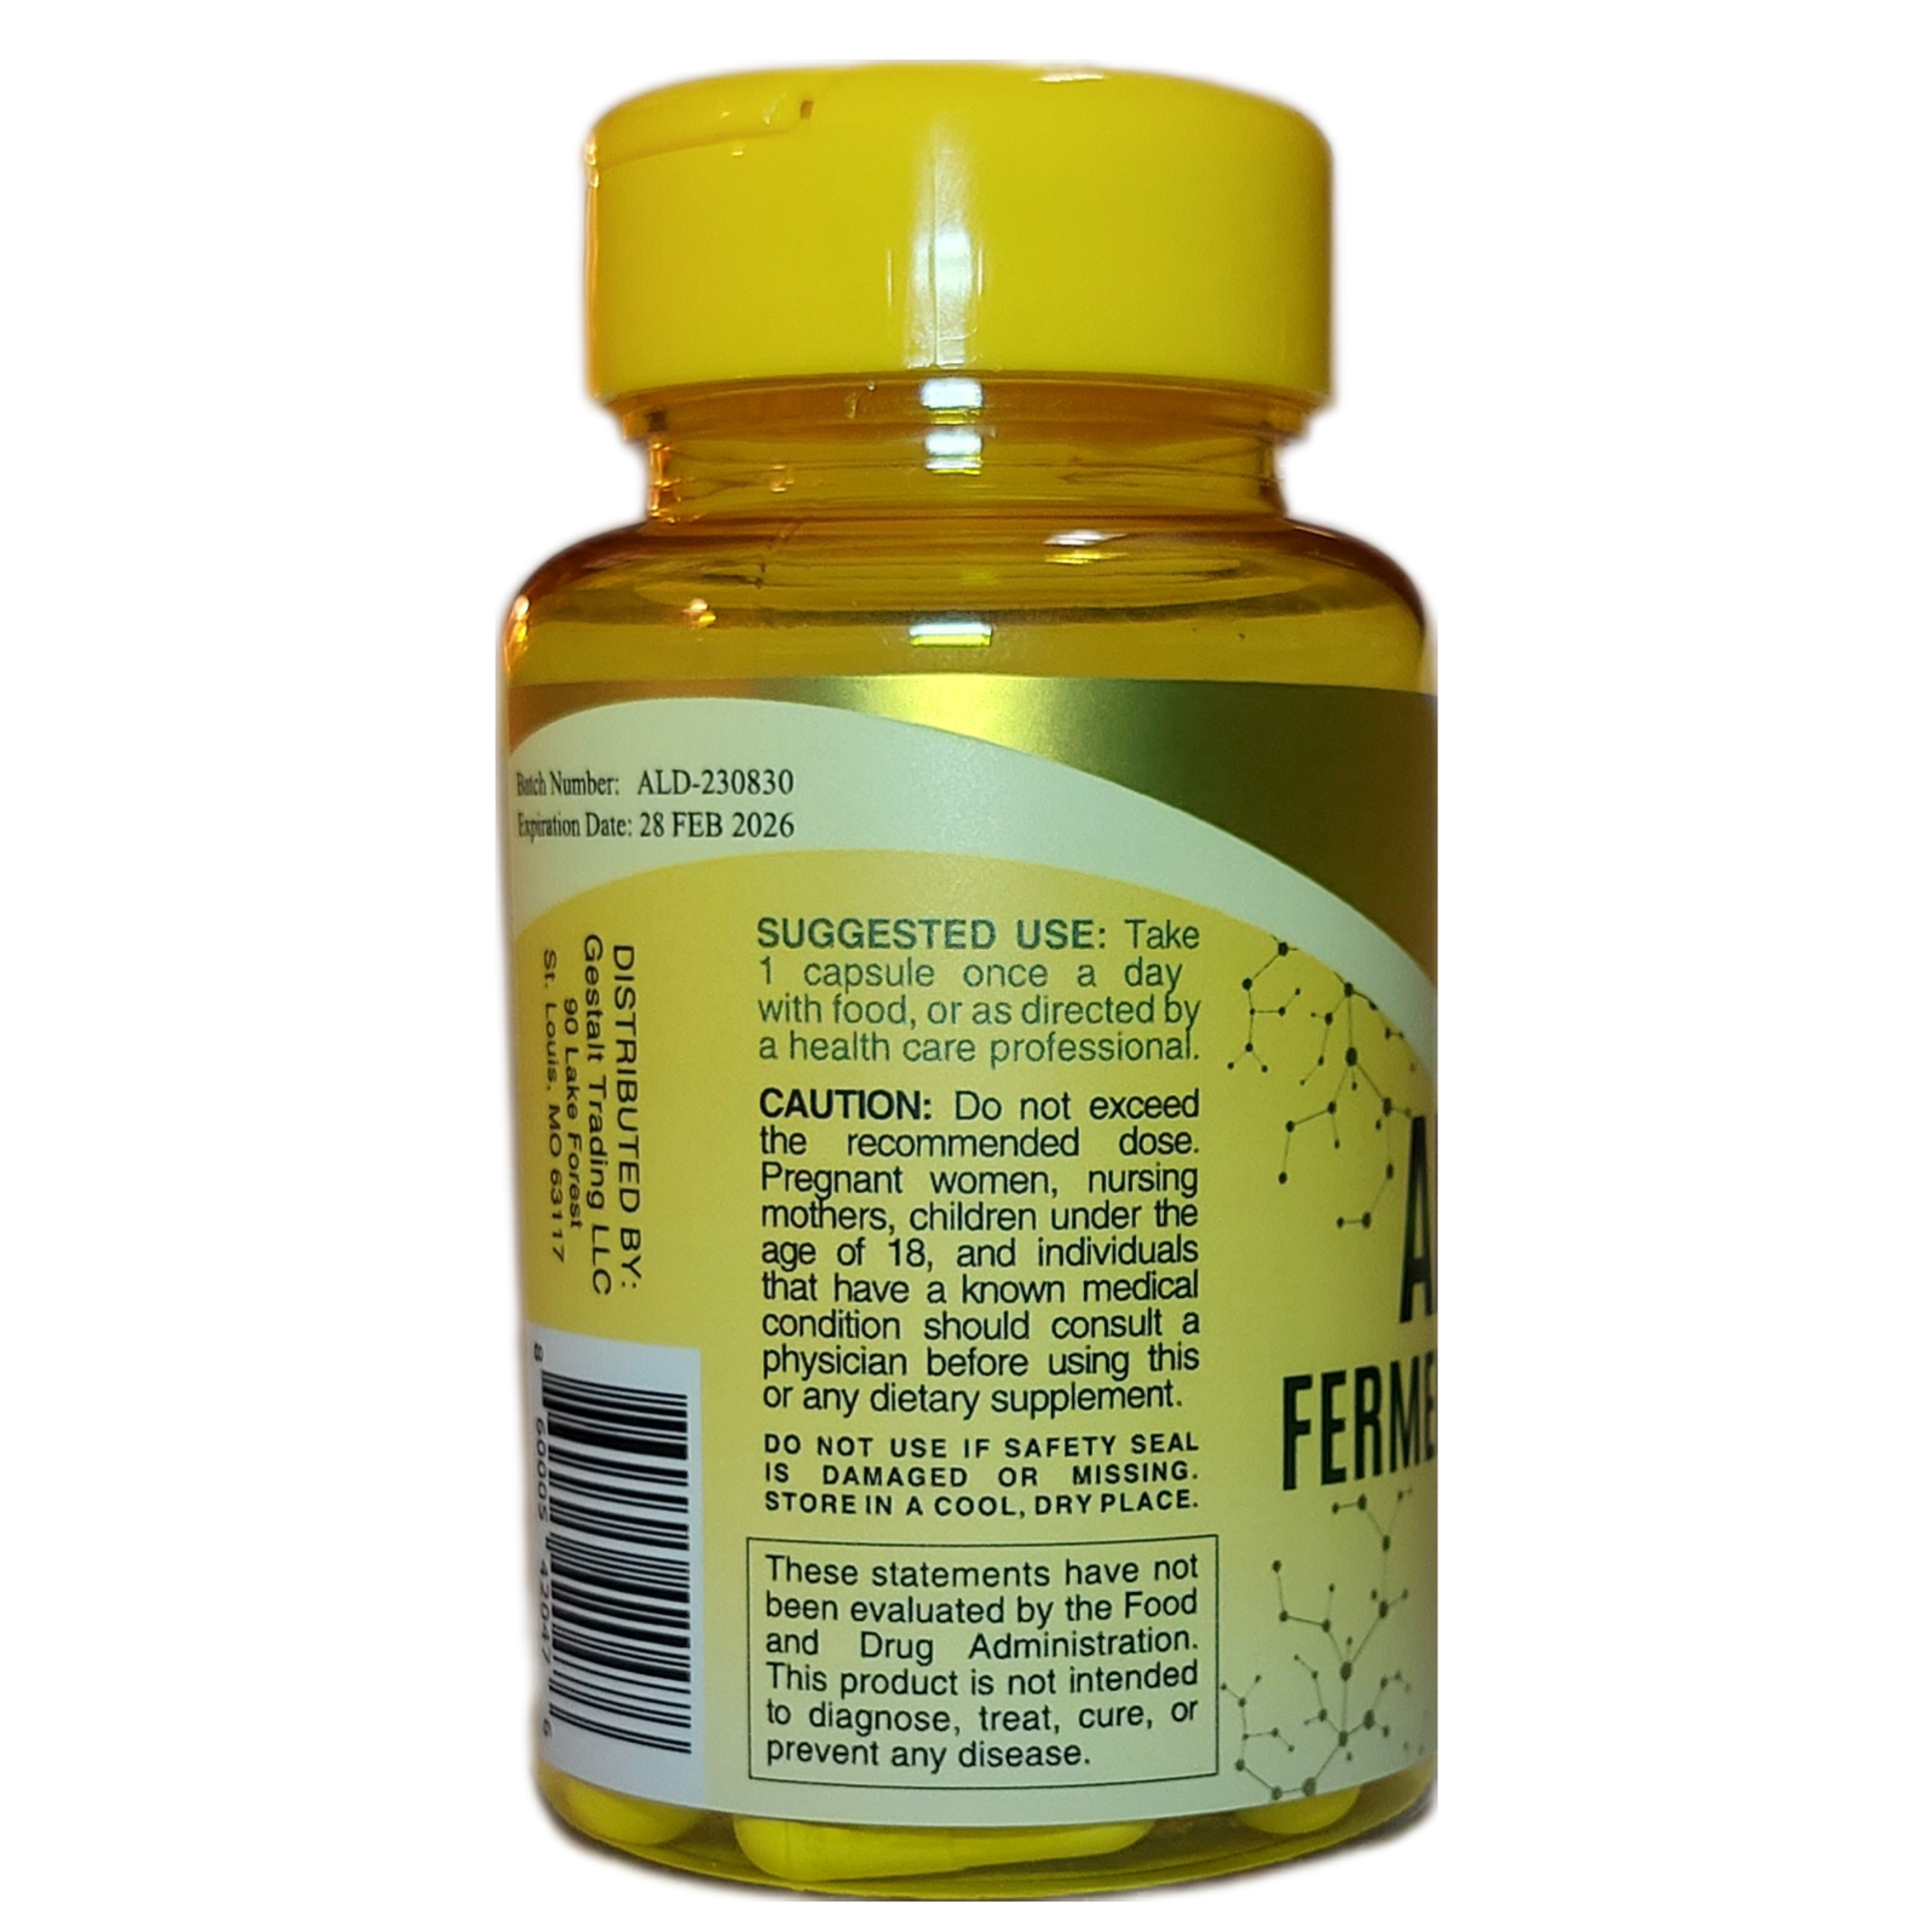 Apigenin - Fermented Chamomile Extract